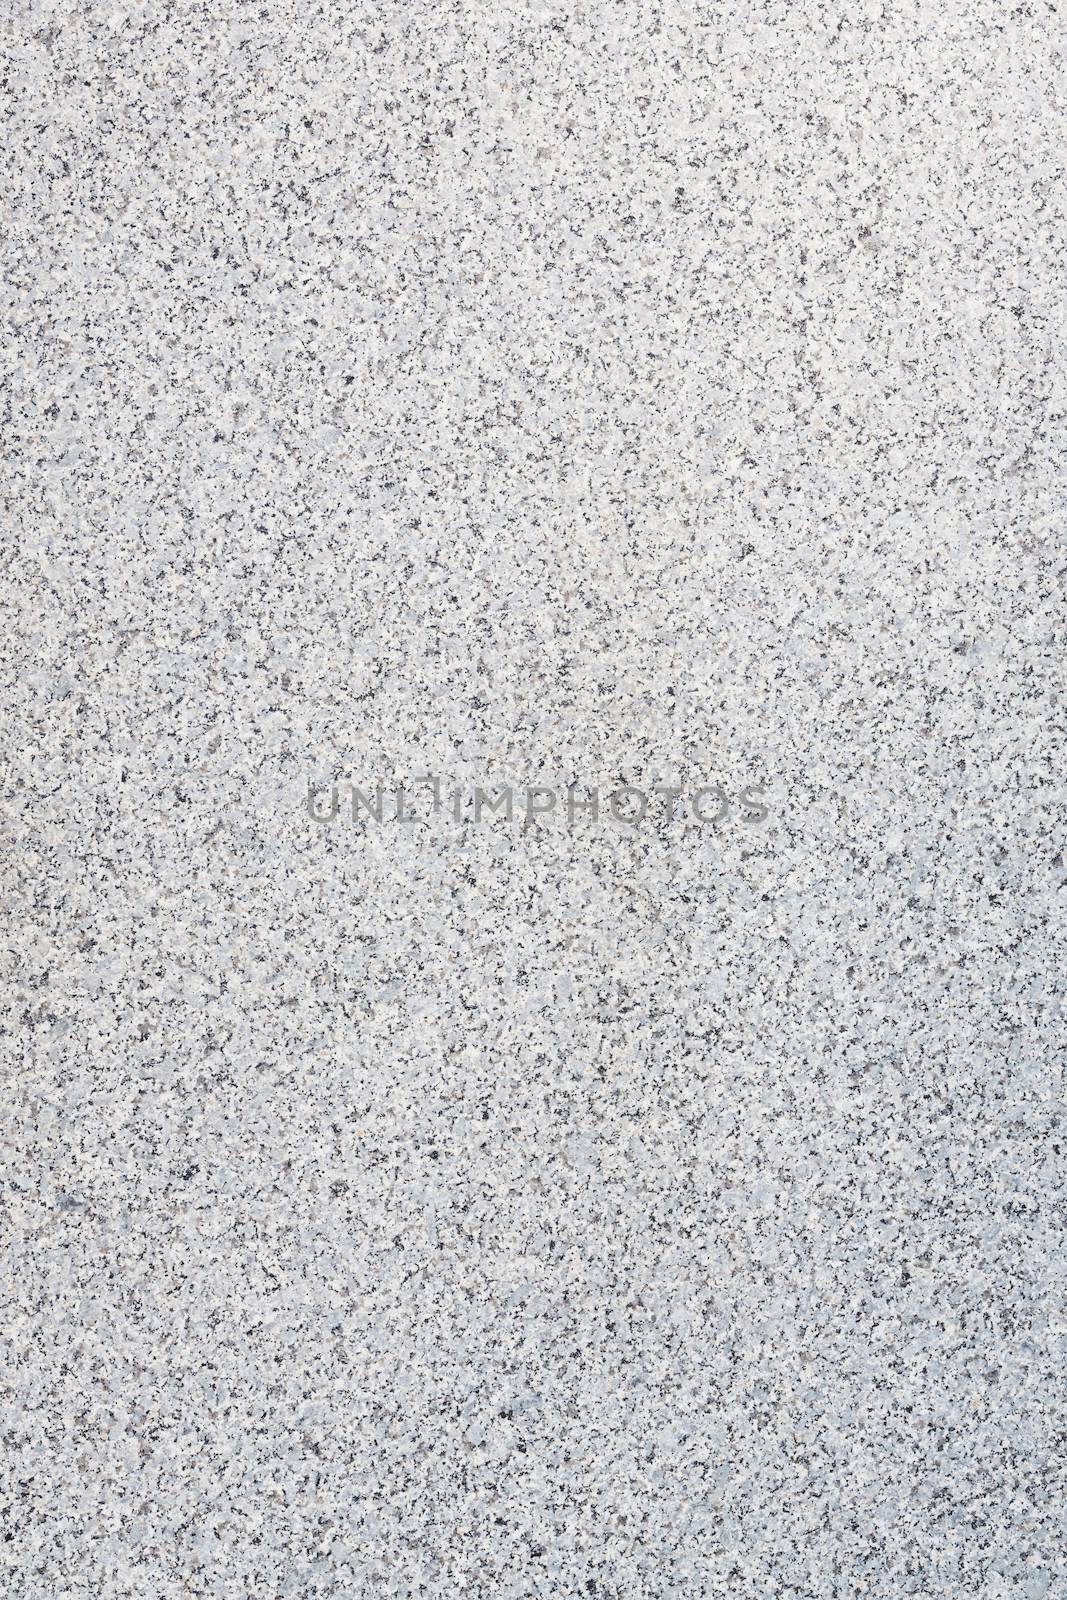 Multi color granite tiles floor texture